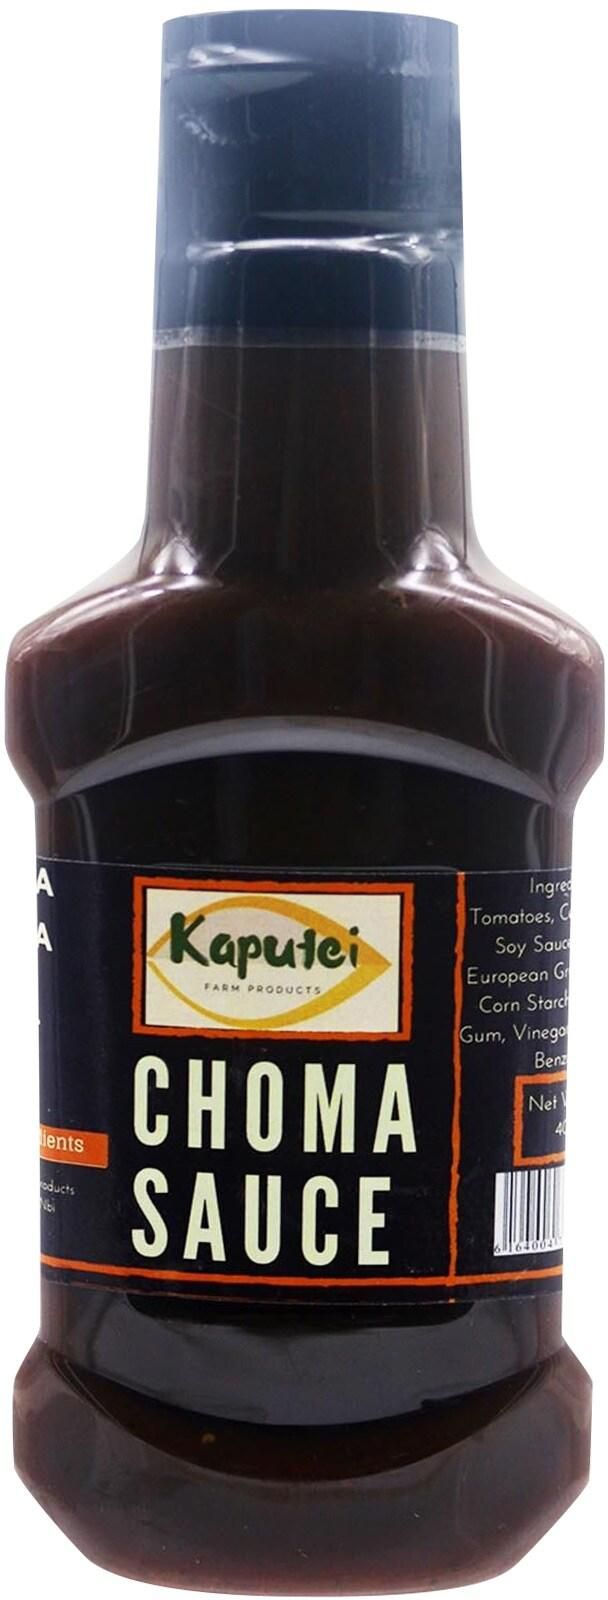 Kaputei Choma Sauce 400g